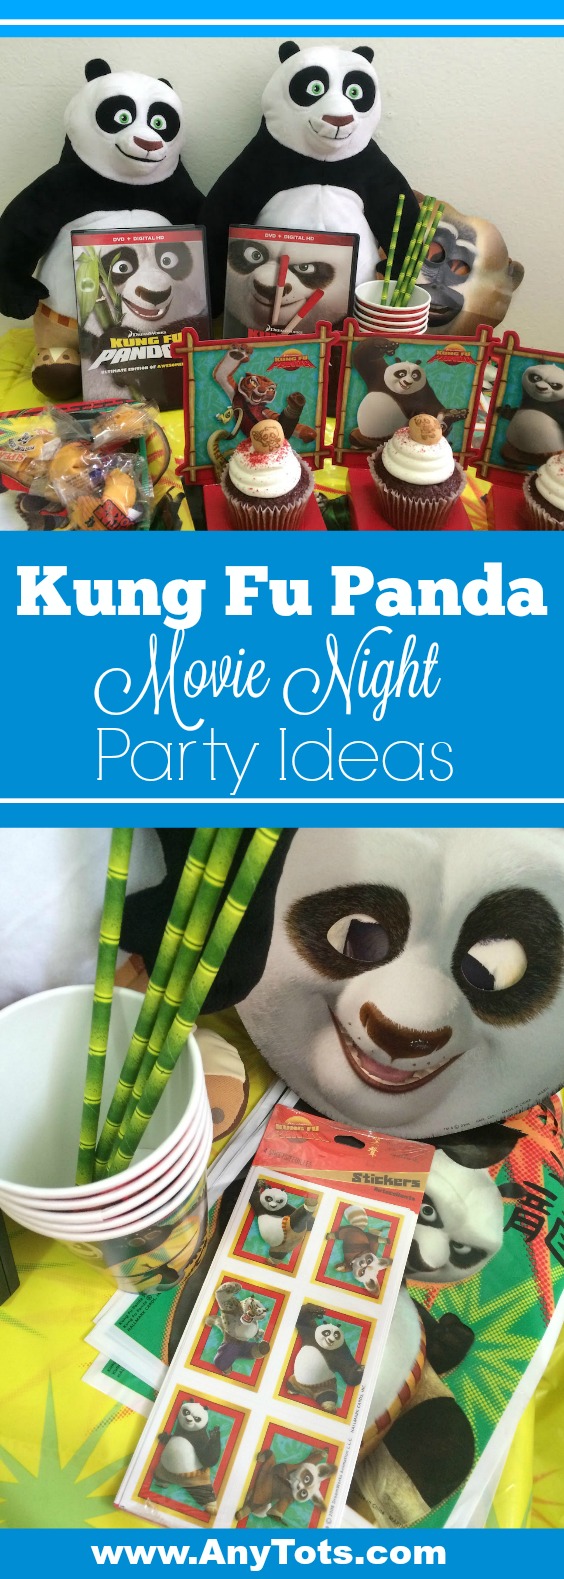 Kung Fu Panda Party Ideas: Free Printable Chinese Take Out Box + Movie ...
